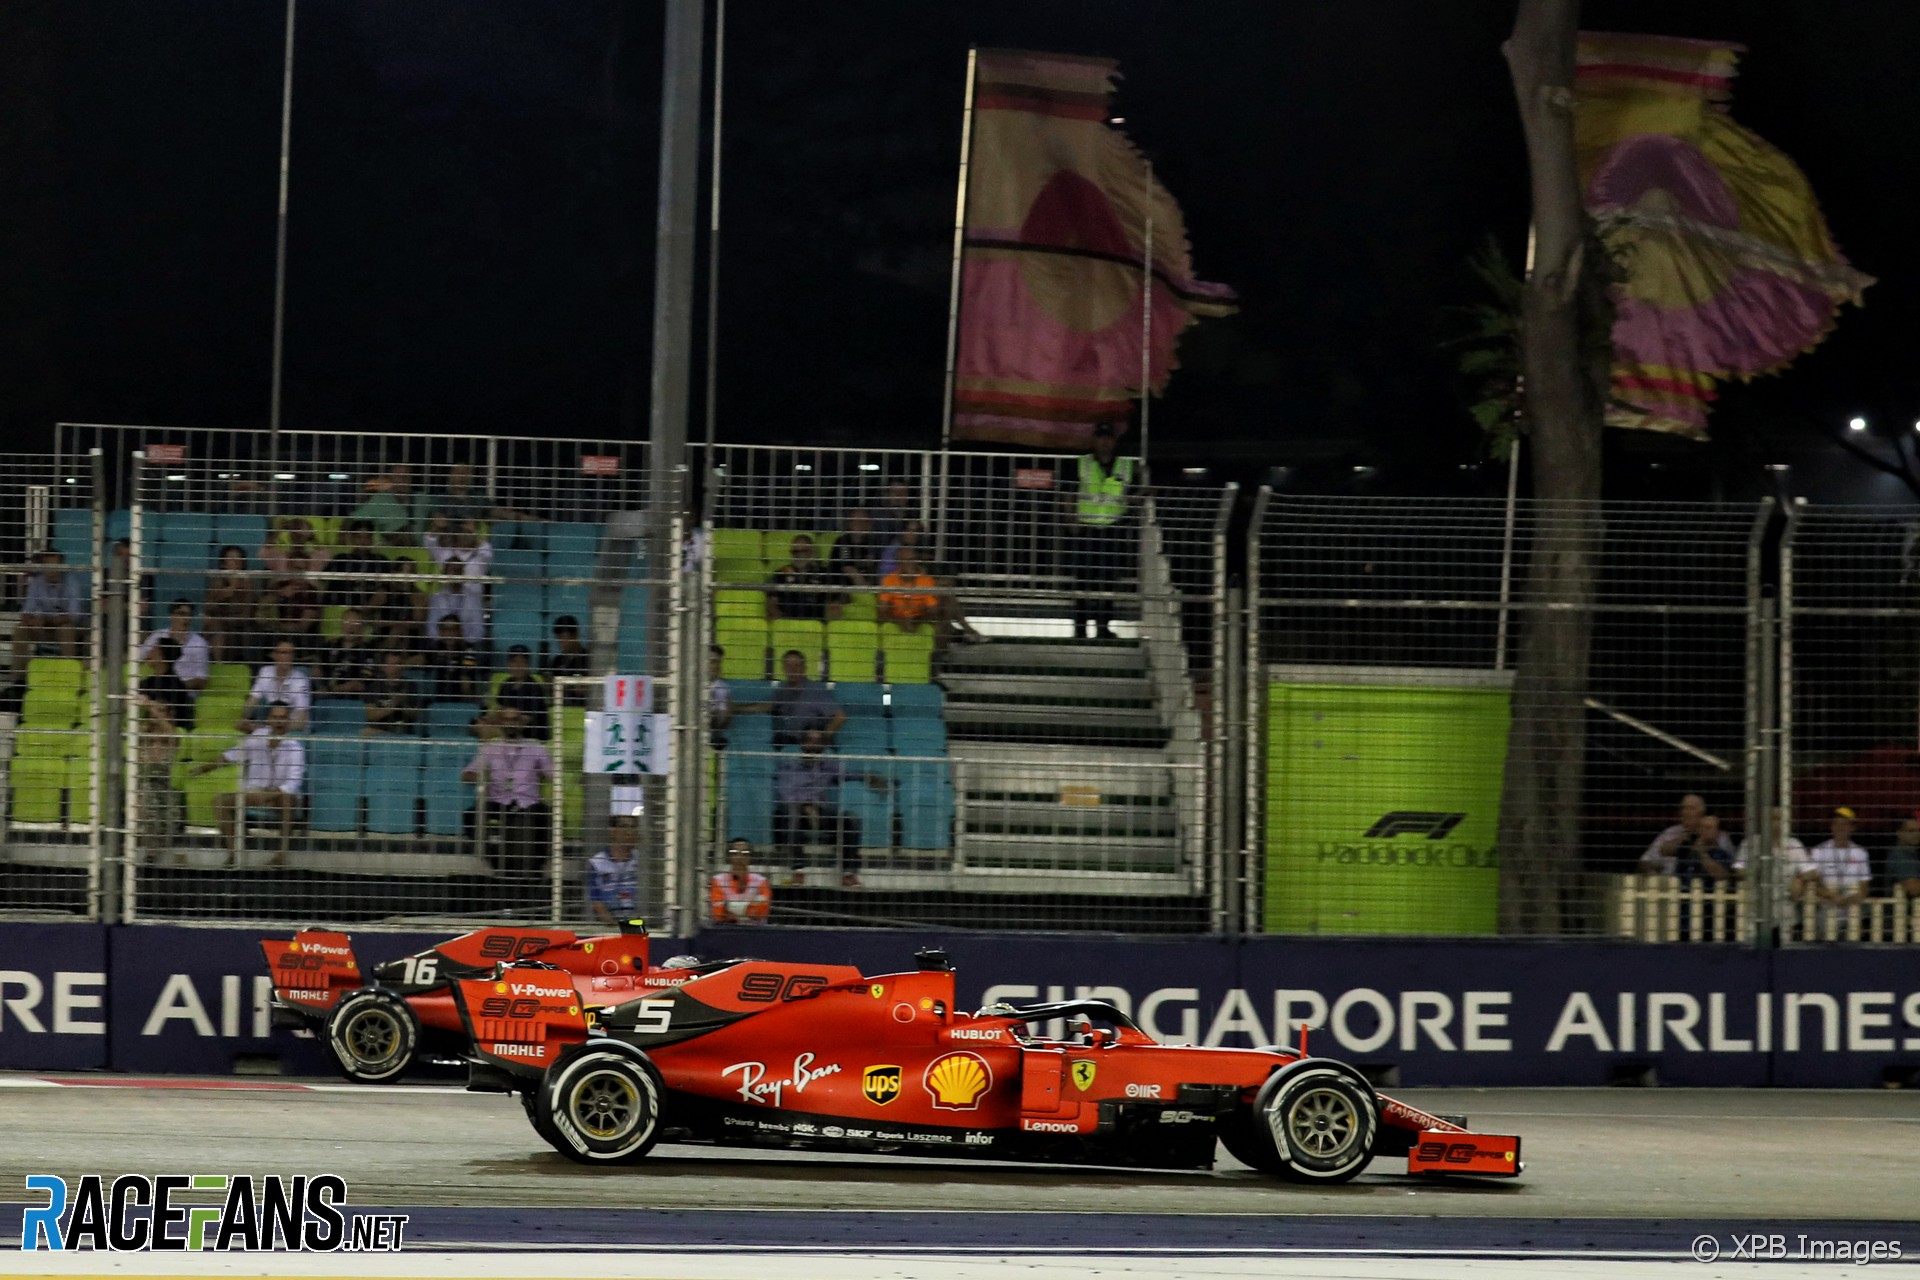 Sebastian Vettel, Charles Leclerc, Ferrari, Singapore, 2019